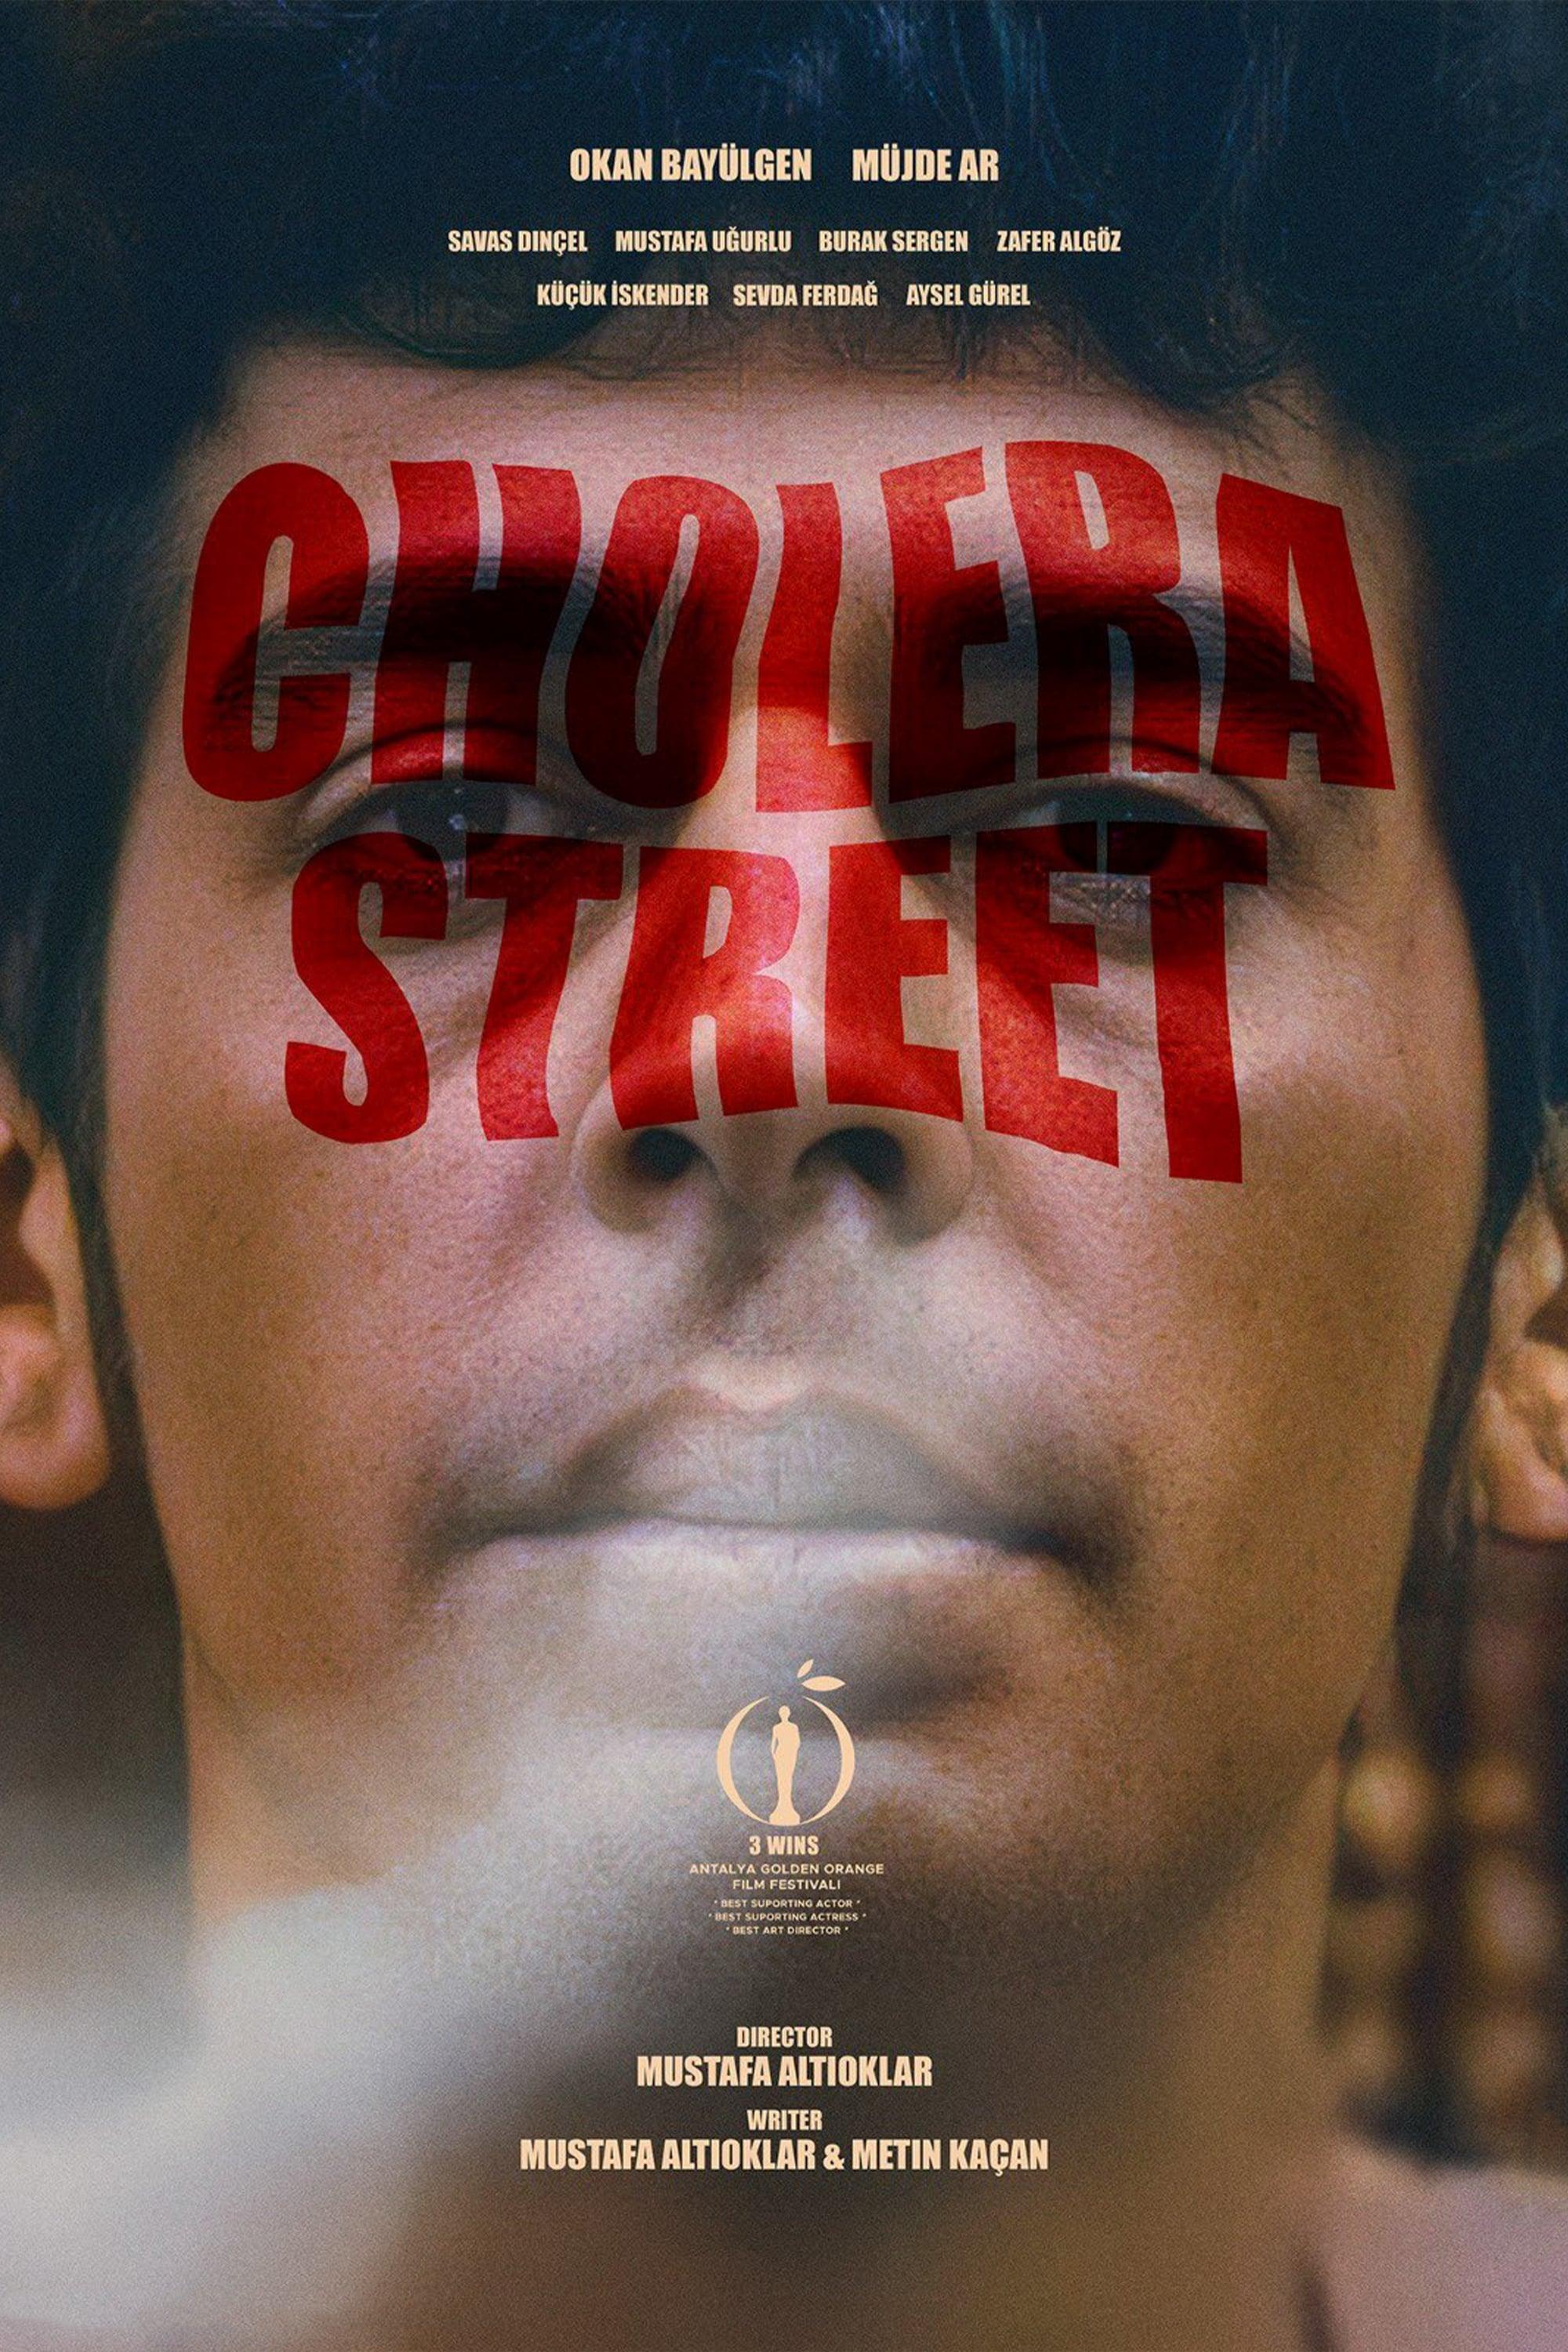 Cholera Street poster